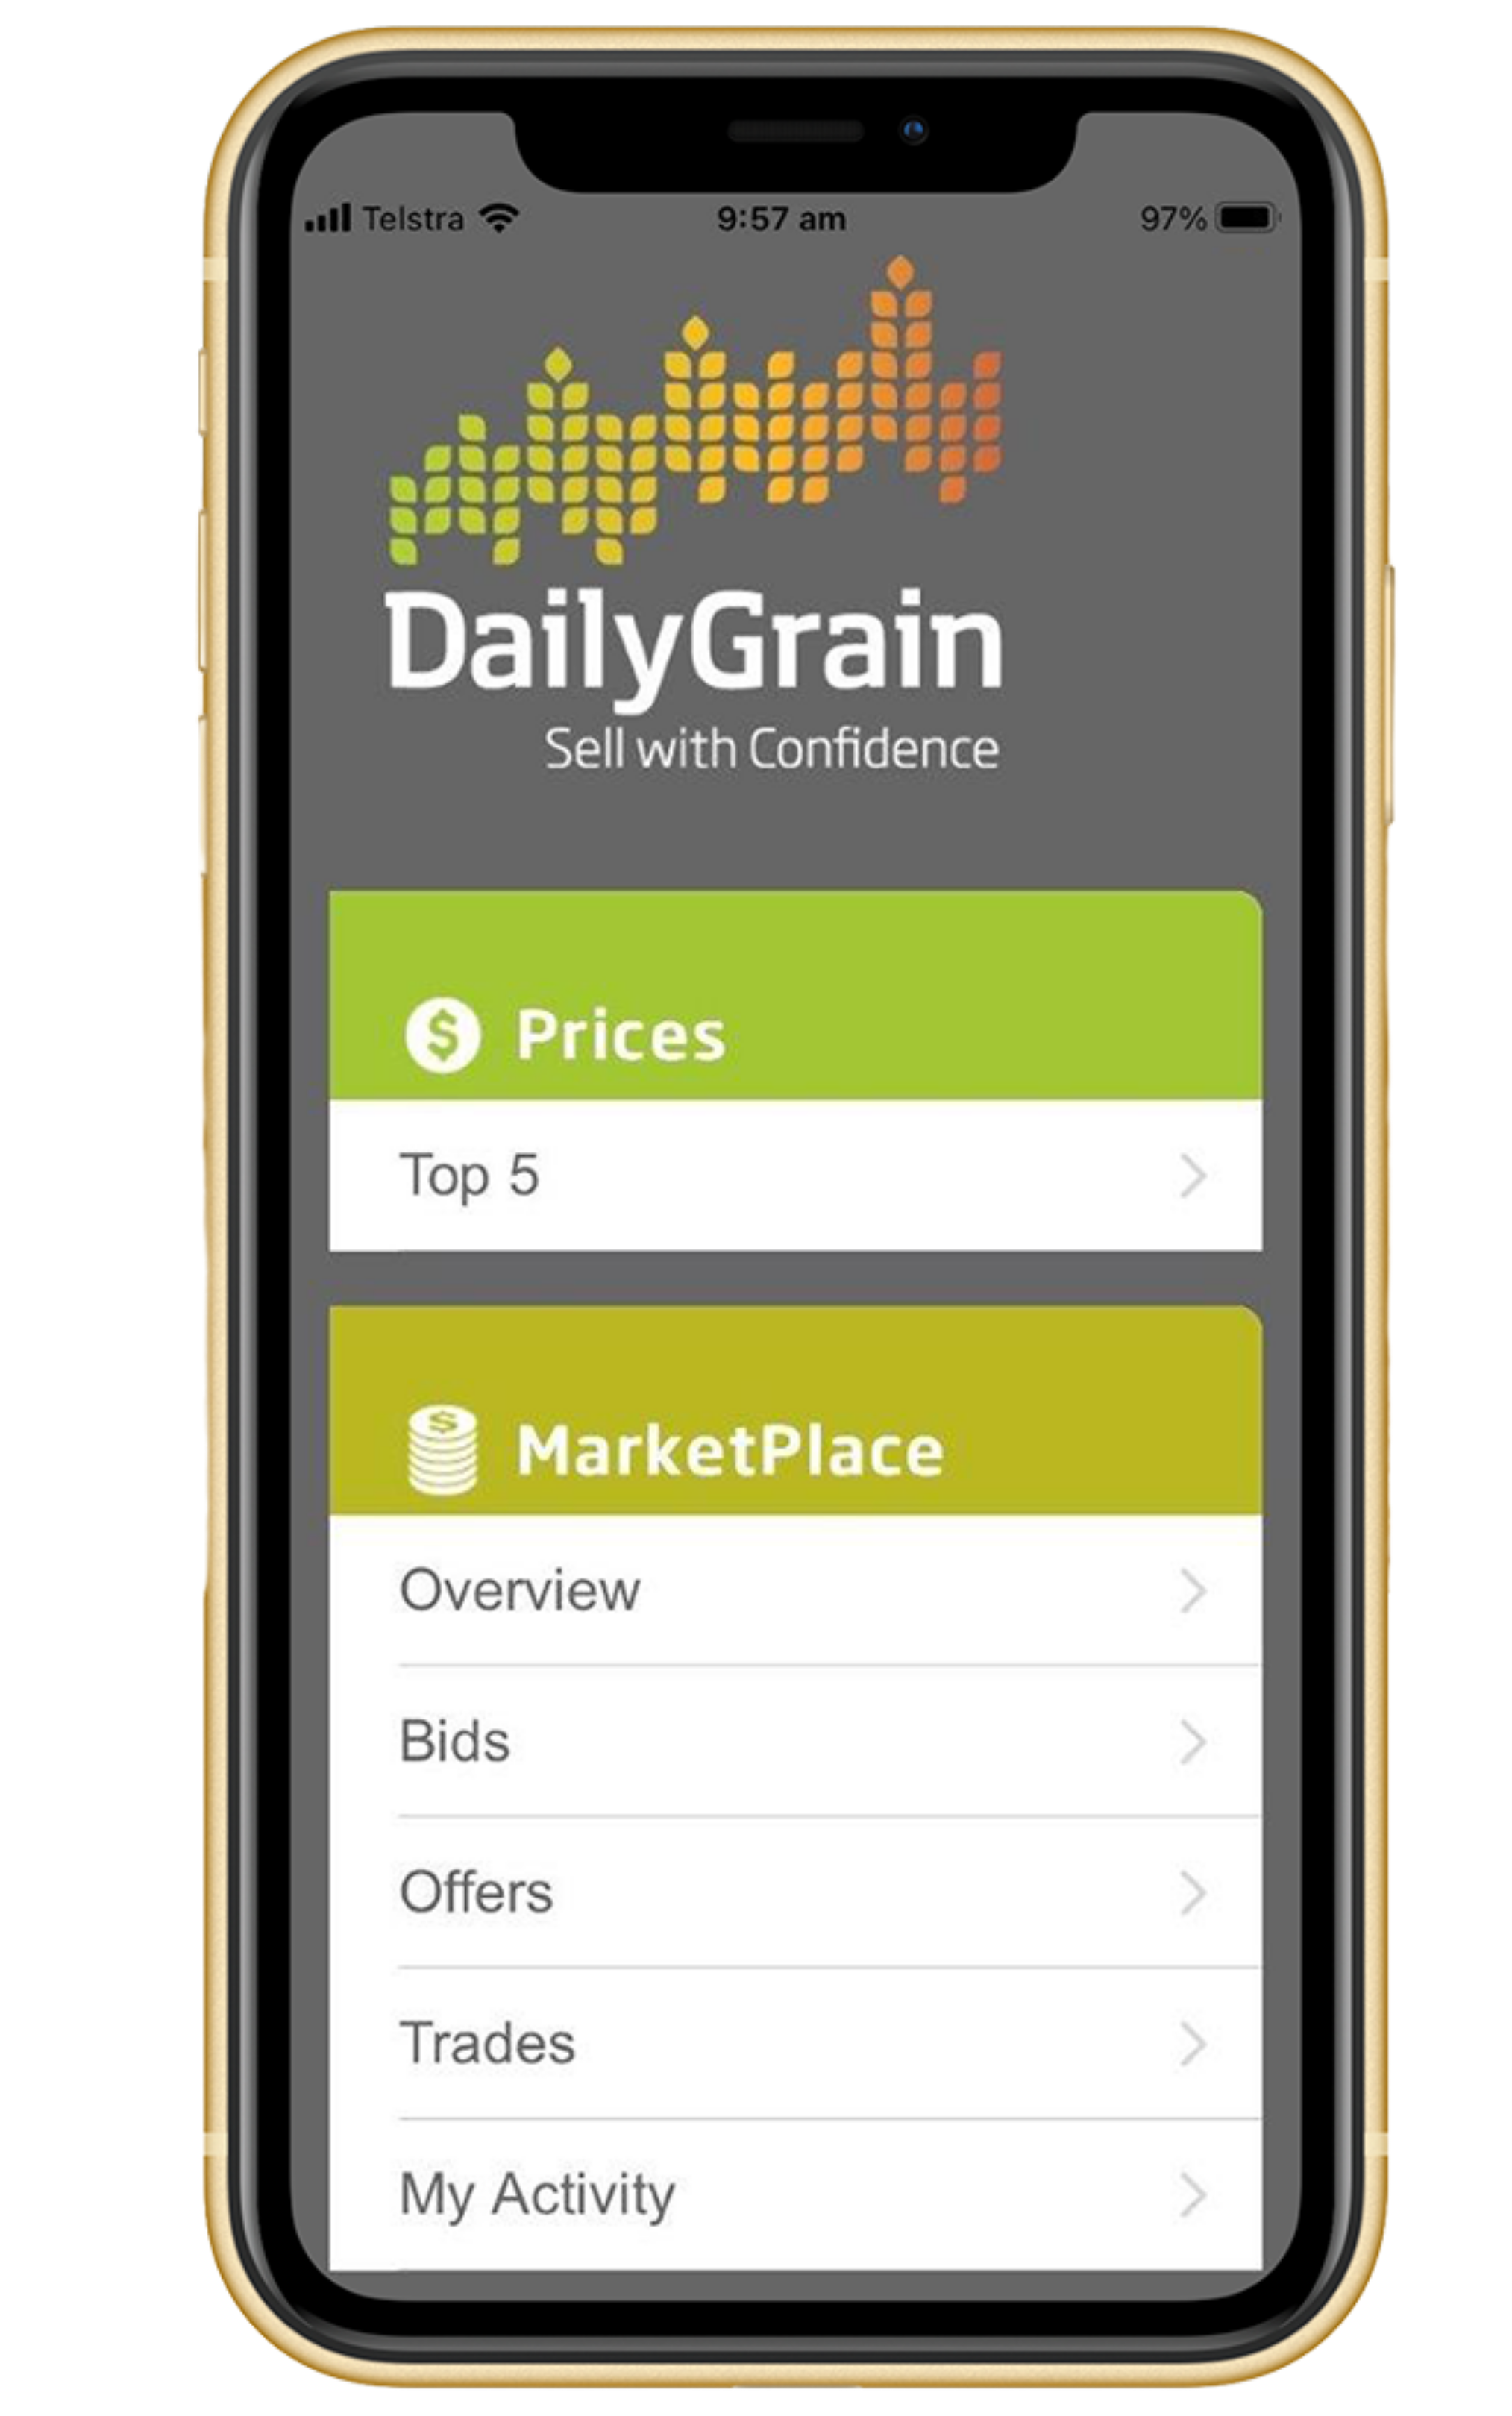 DailyGrain - DailyGrain MarketPlace - DailyGrain Top 5